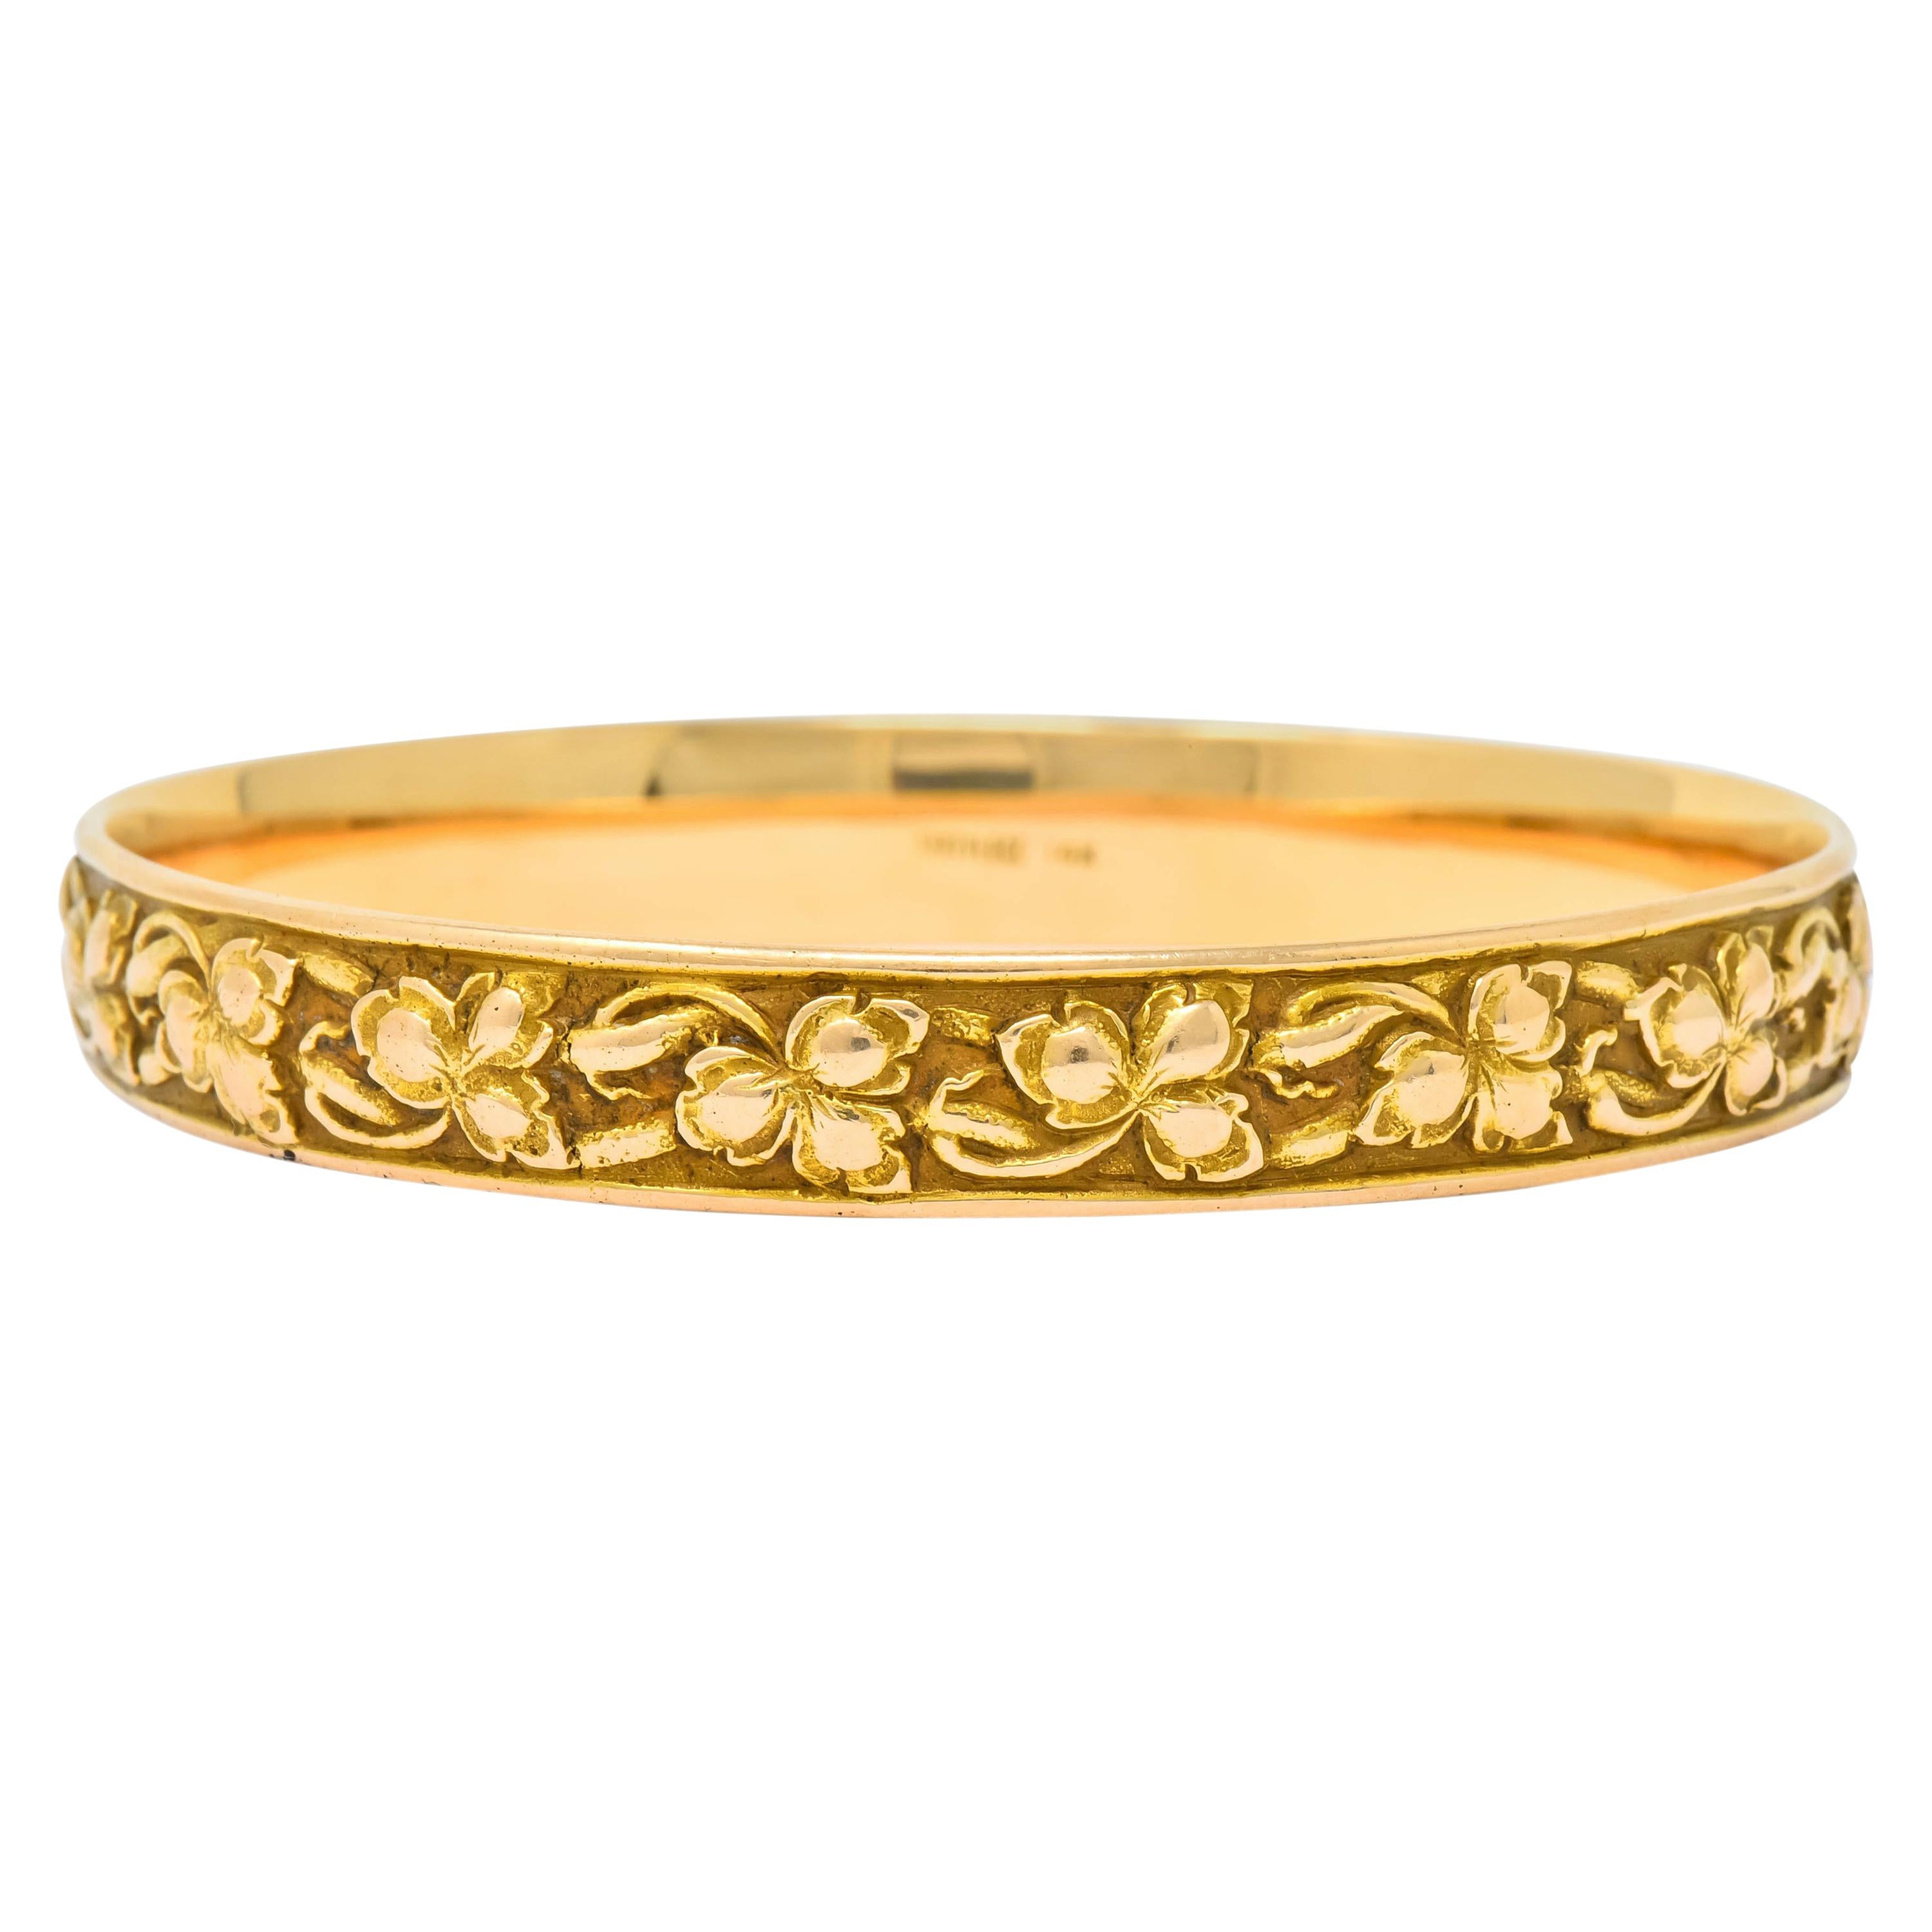 Shreve & Co. Art Nouveau 14 Karat Gold Ivy Foliate Bangle Bracelet